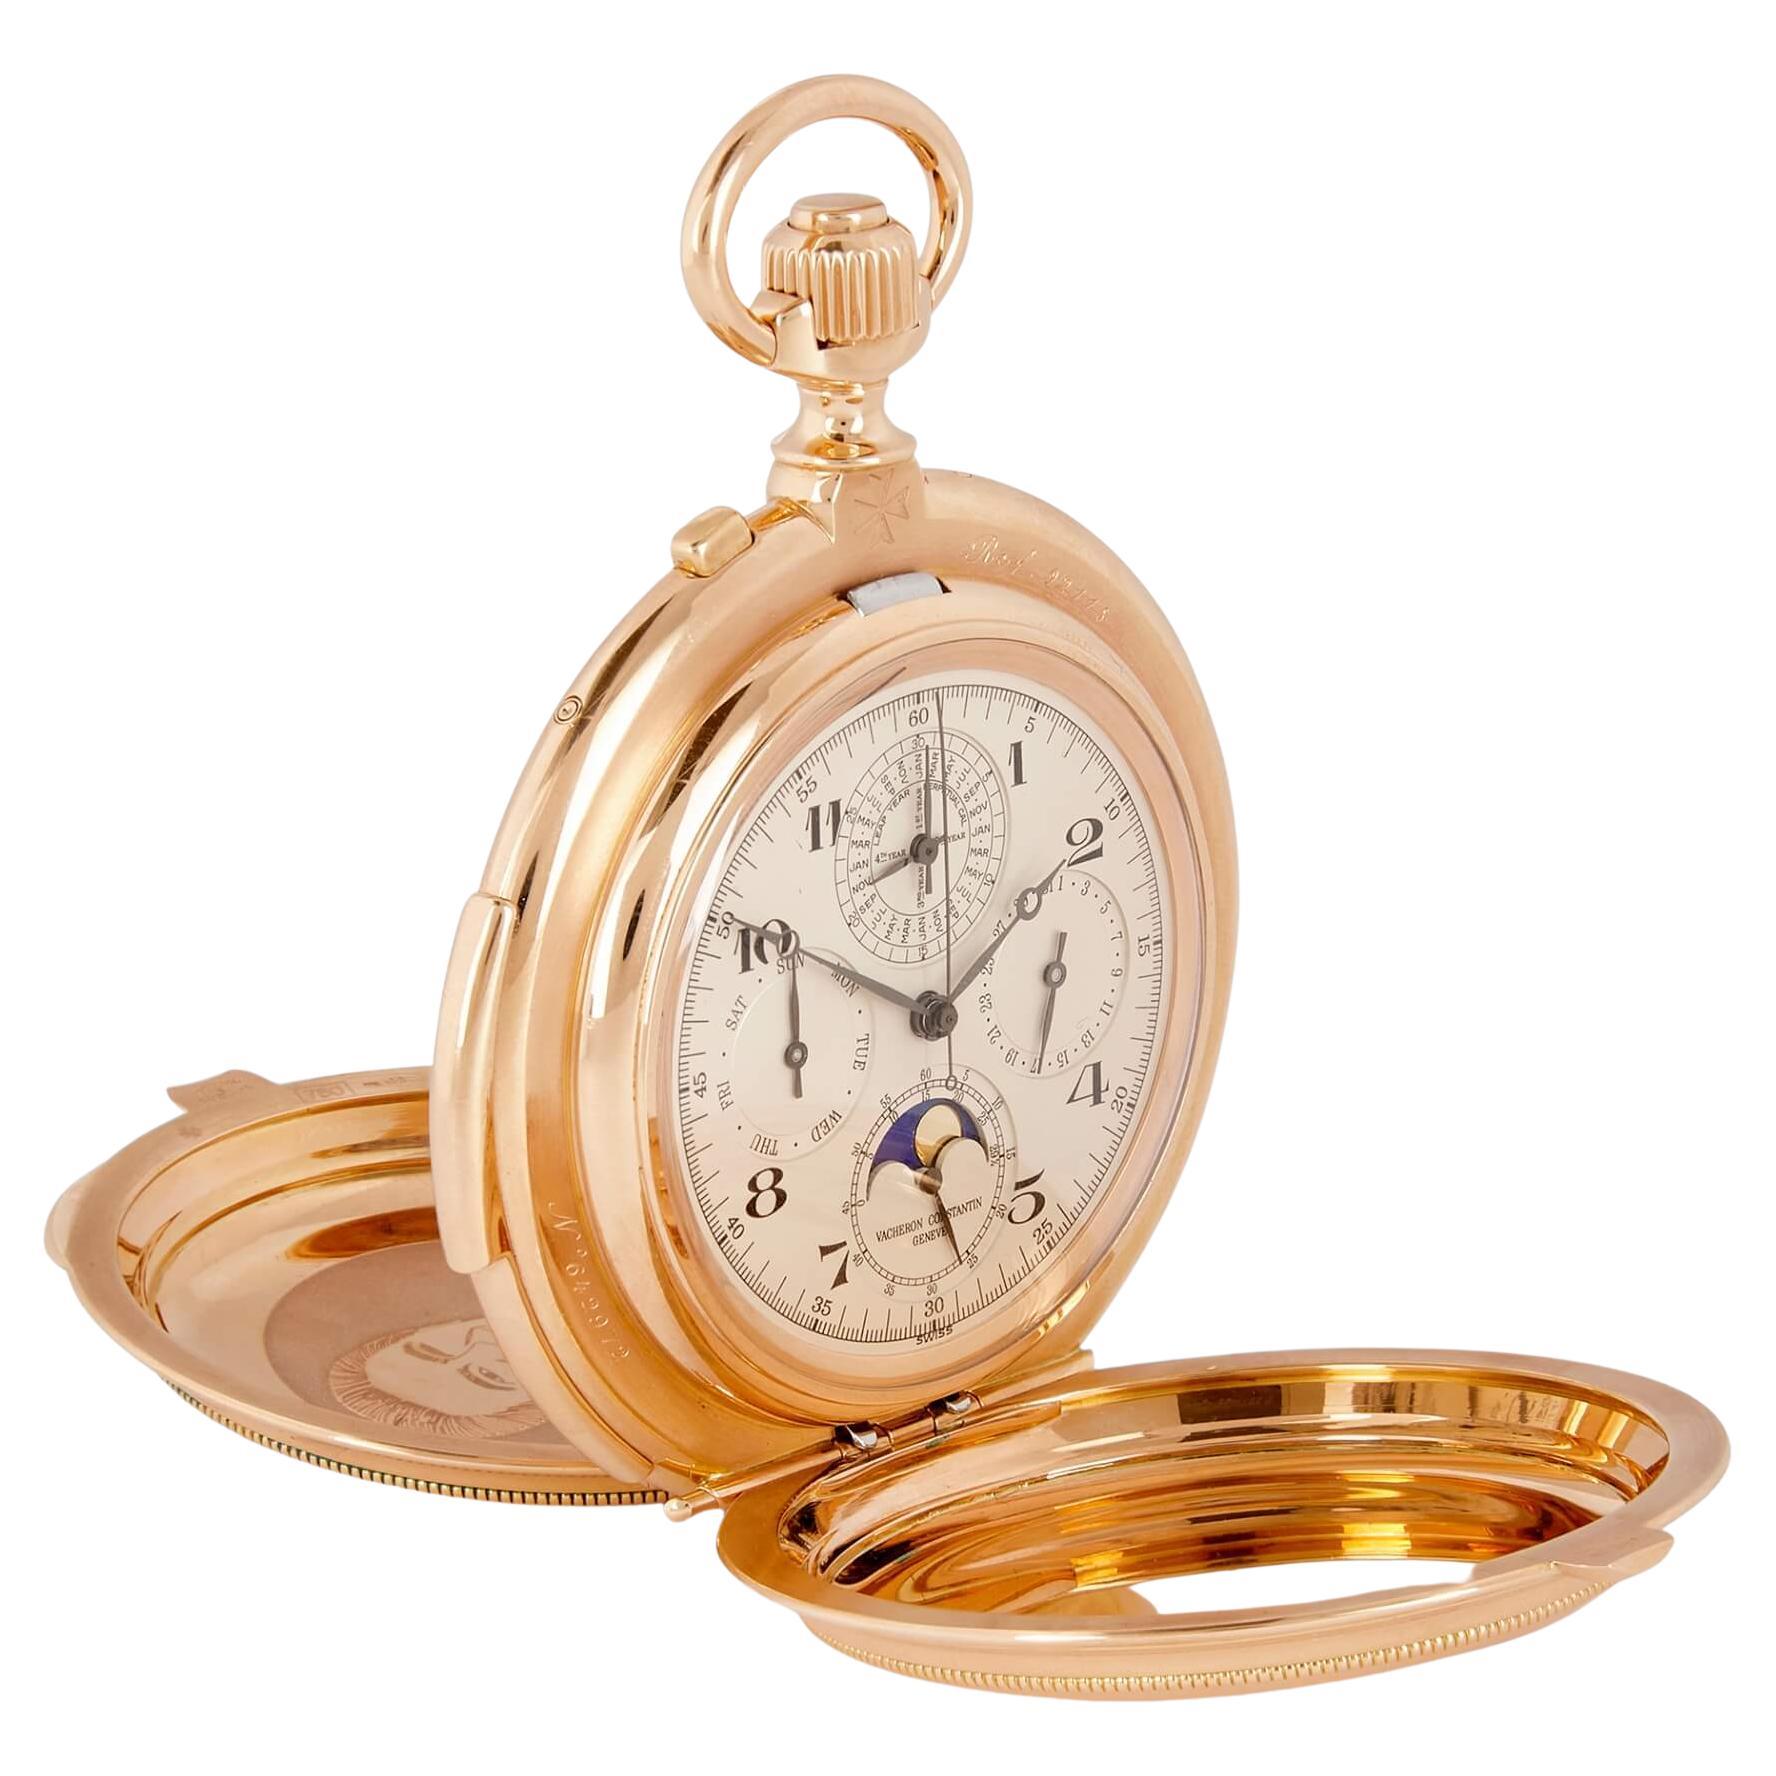 Vacheron Constantin Ref. 92115, a very fine, unique 18K pink gold pocket watch For Sale